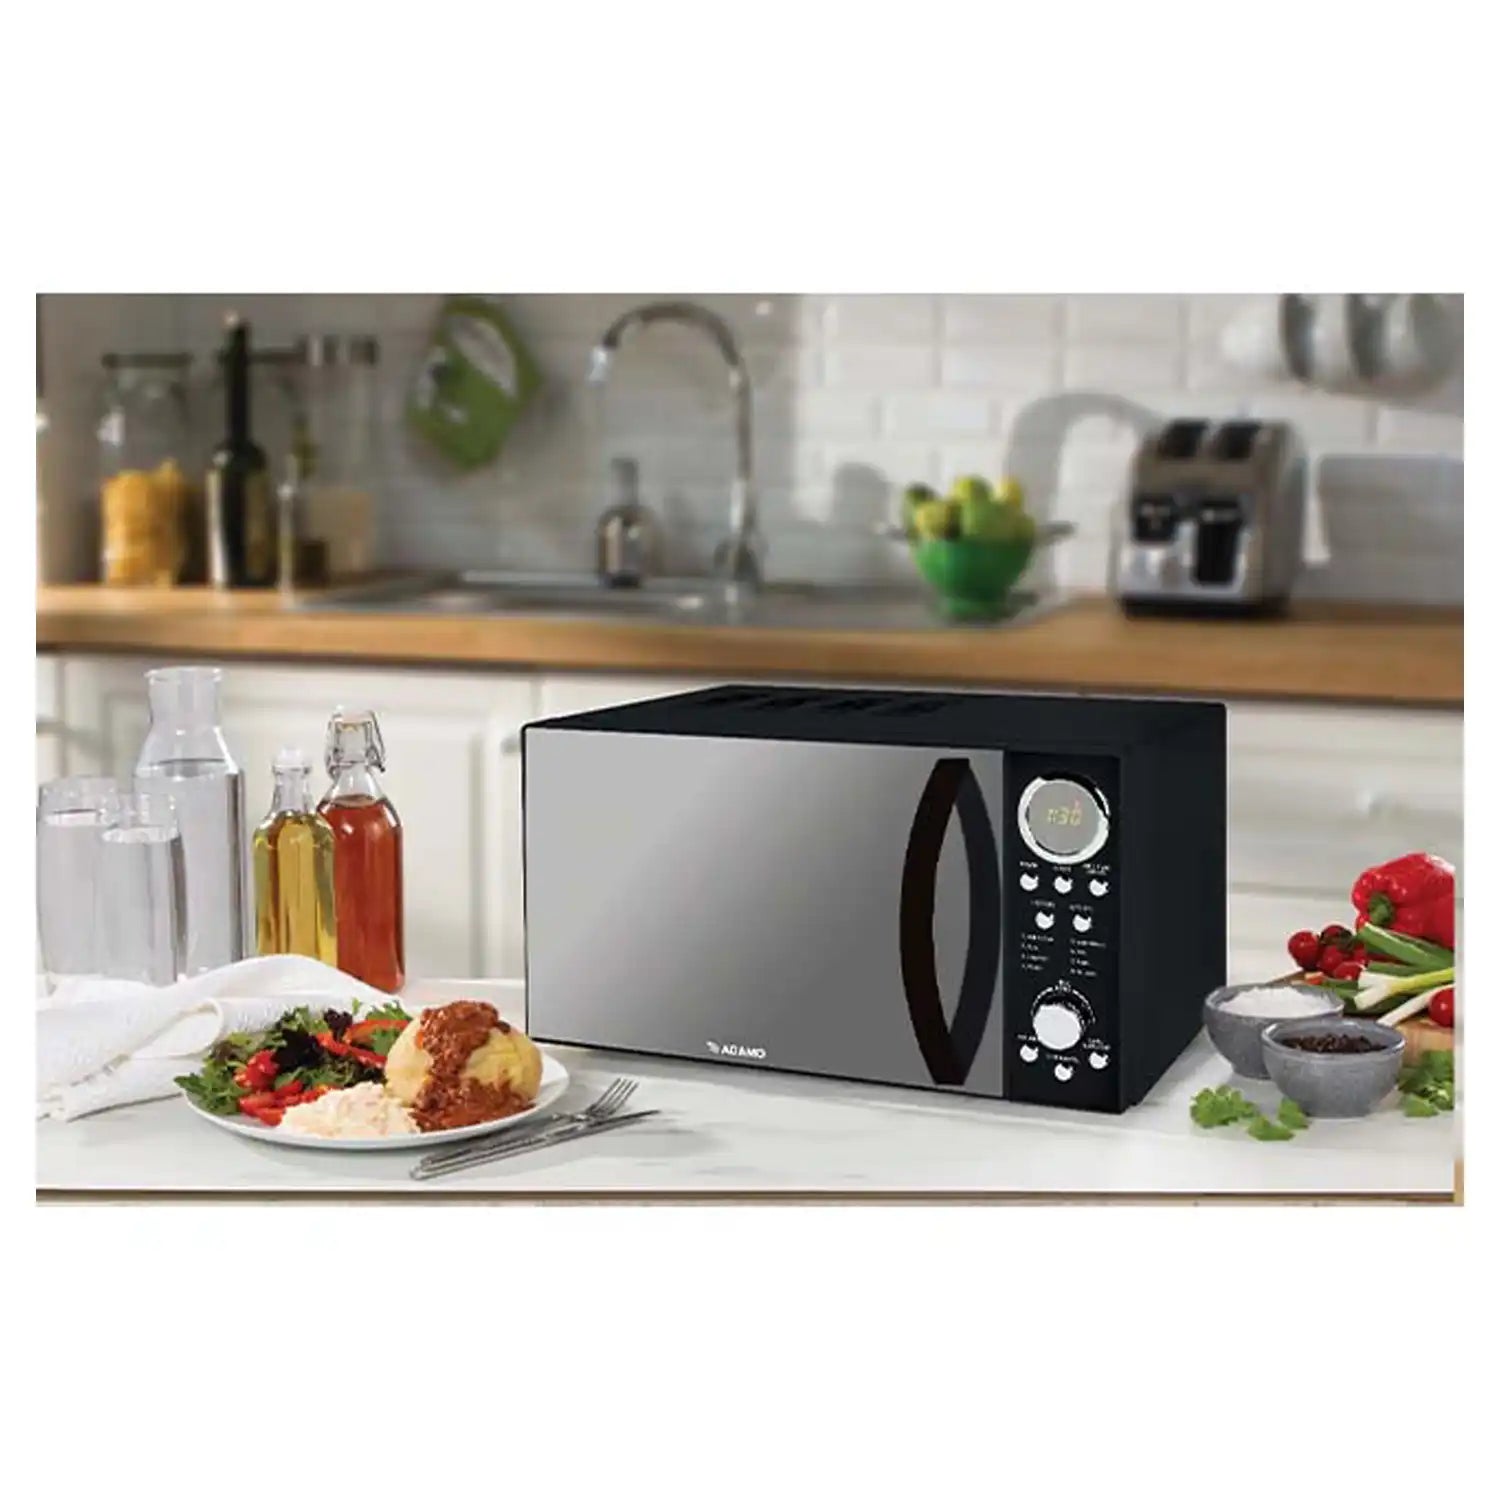 Adamo 20L Digital Microwave 700W - Black 1 Shaws Department Stores